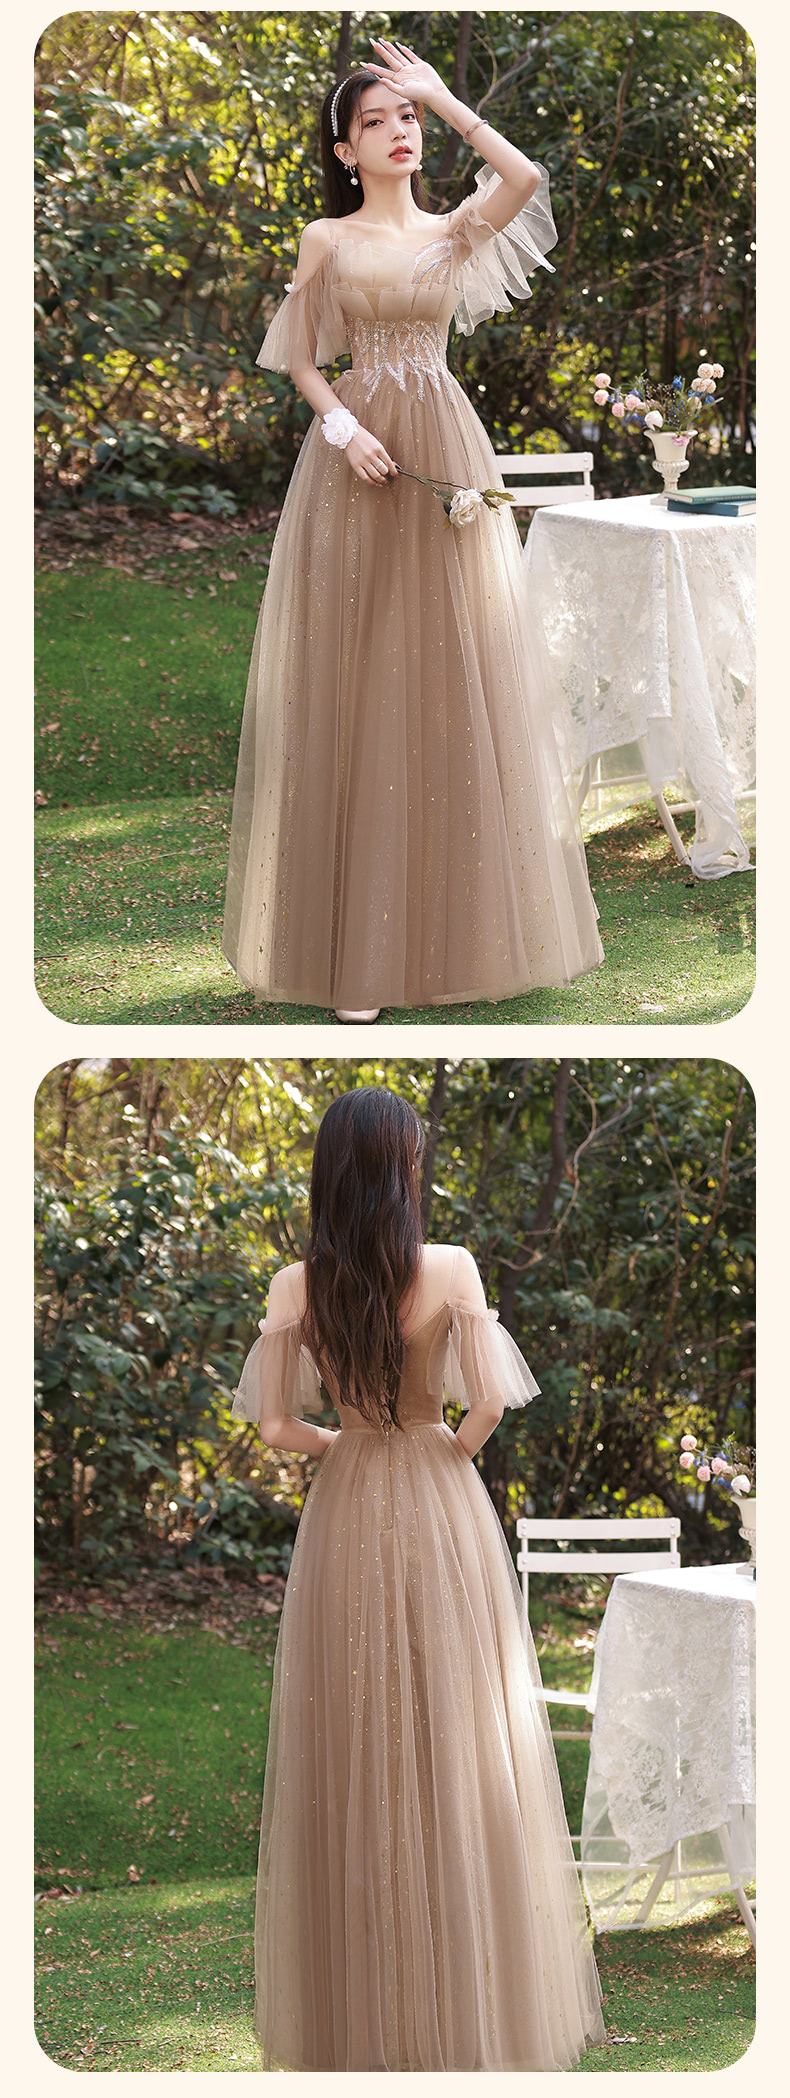 Chiffon-Floor-Length-Bridesmaids-Wedding-Prom-Dress-Ball-Gown27.jpg